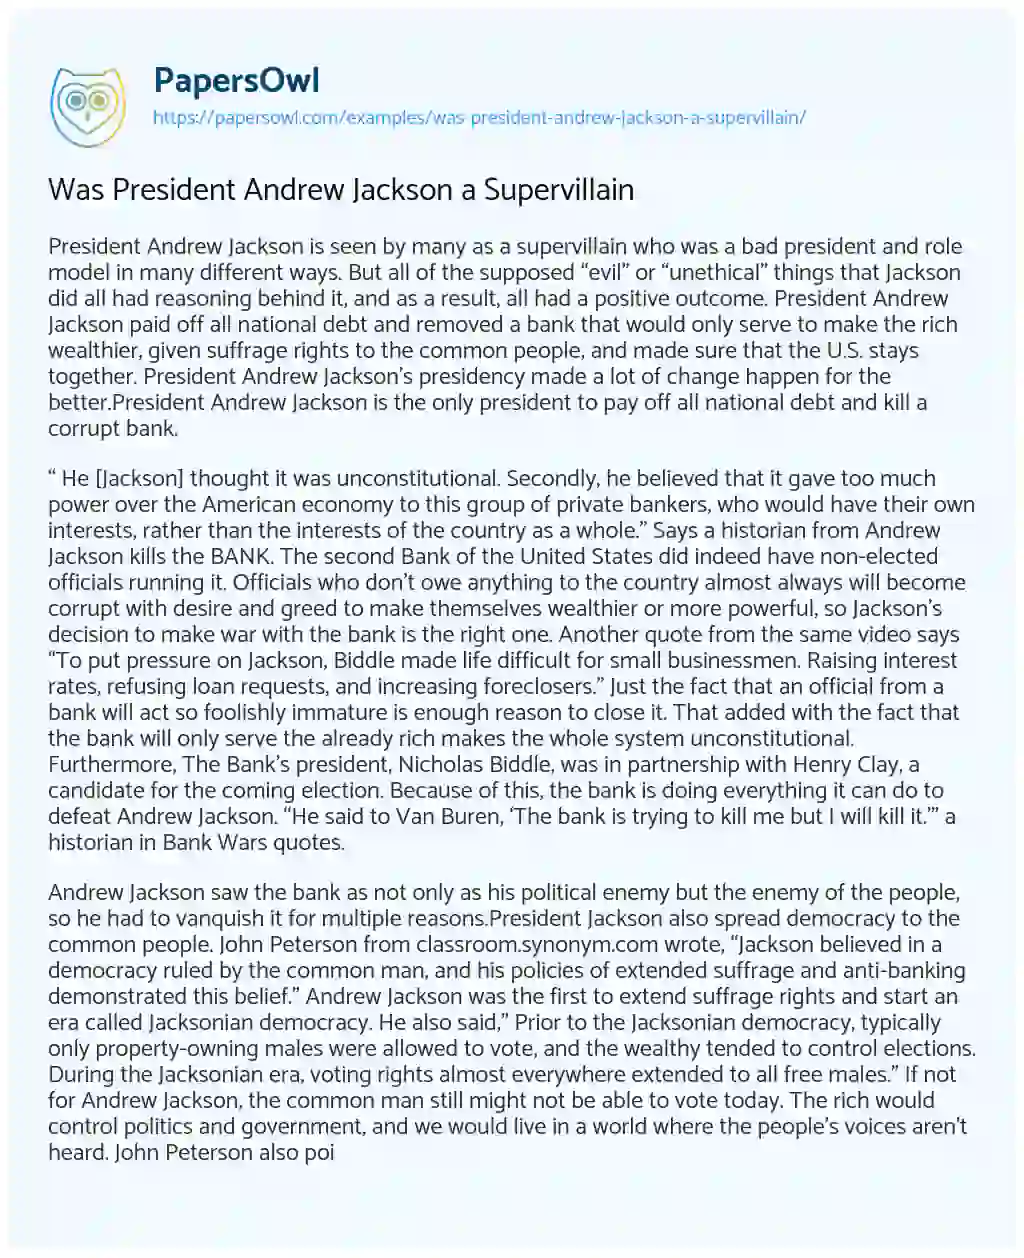 Essay on Was President Andrew Jackson a Supervillain